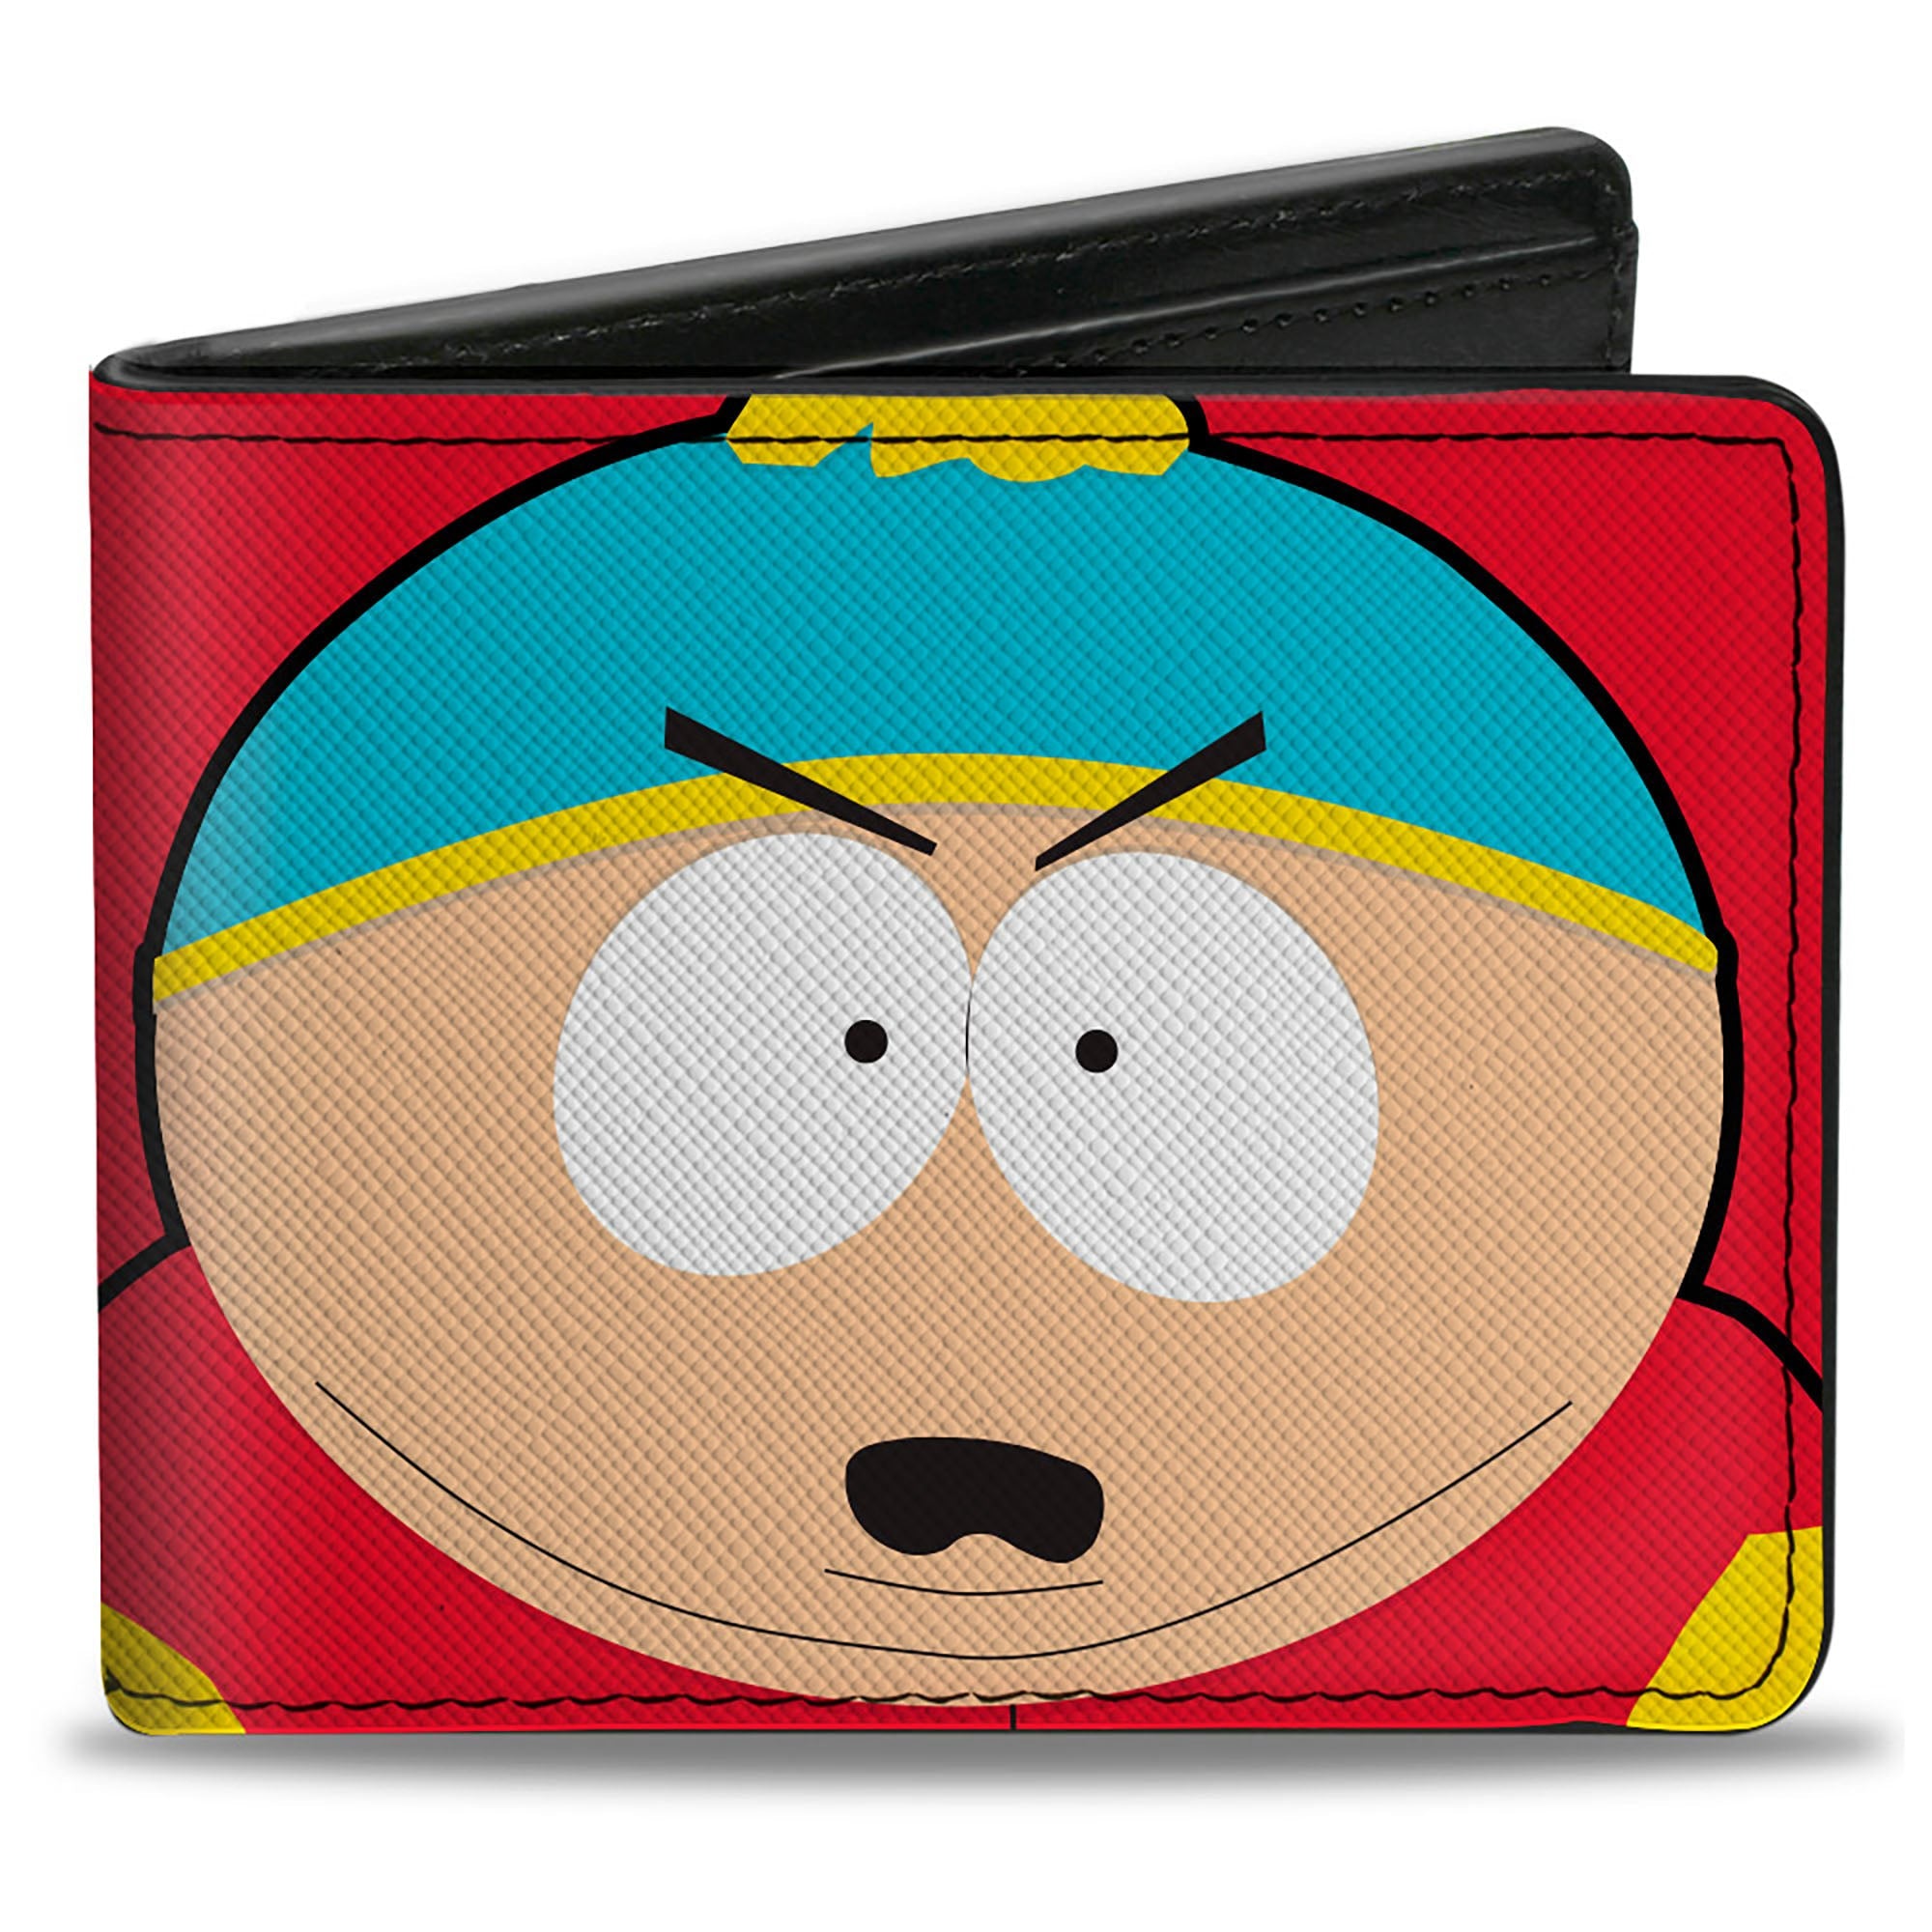 Bi-Fold Wallet - South Park Cartman Face Character Close-Up Red